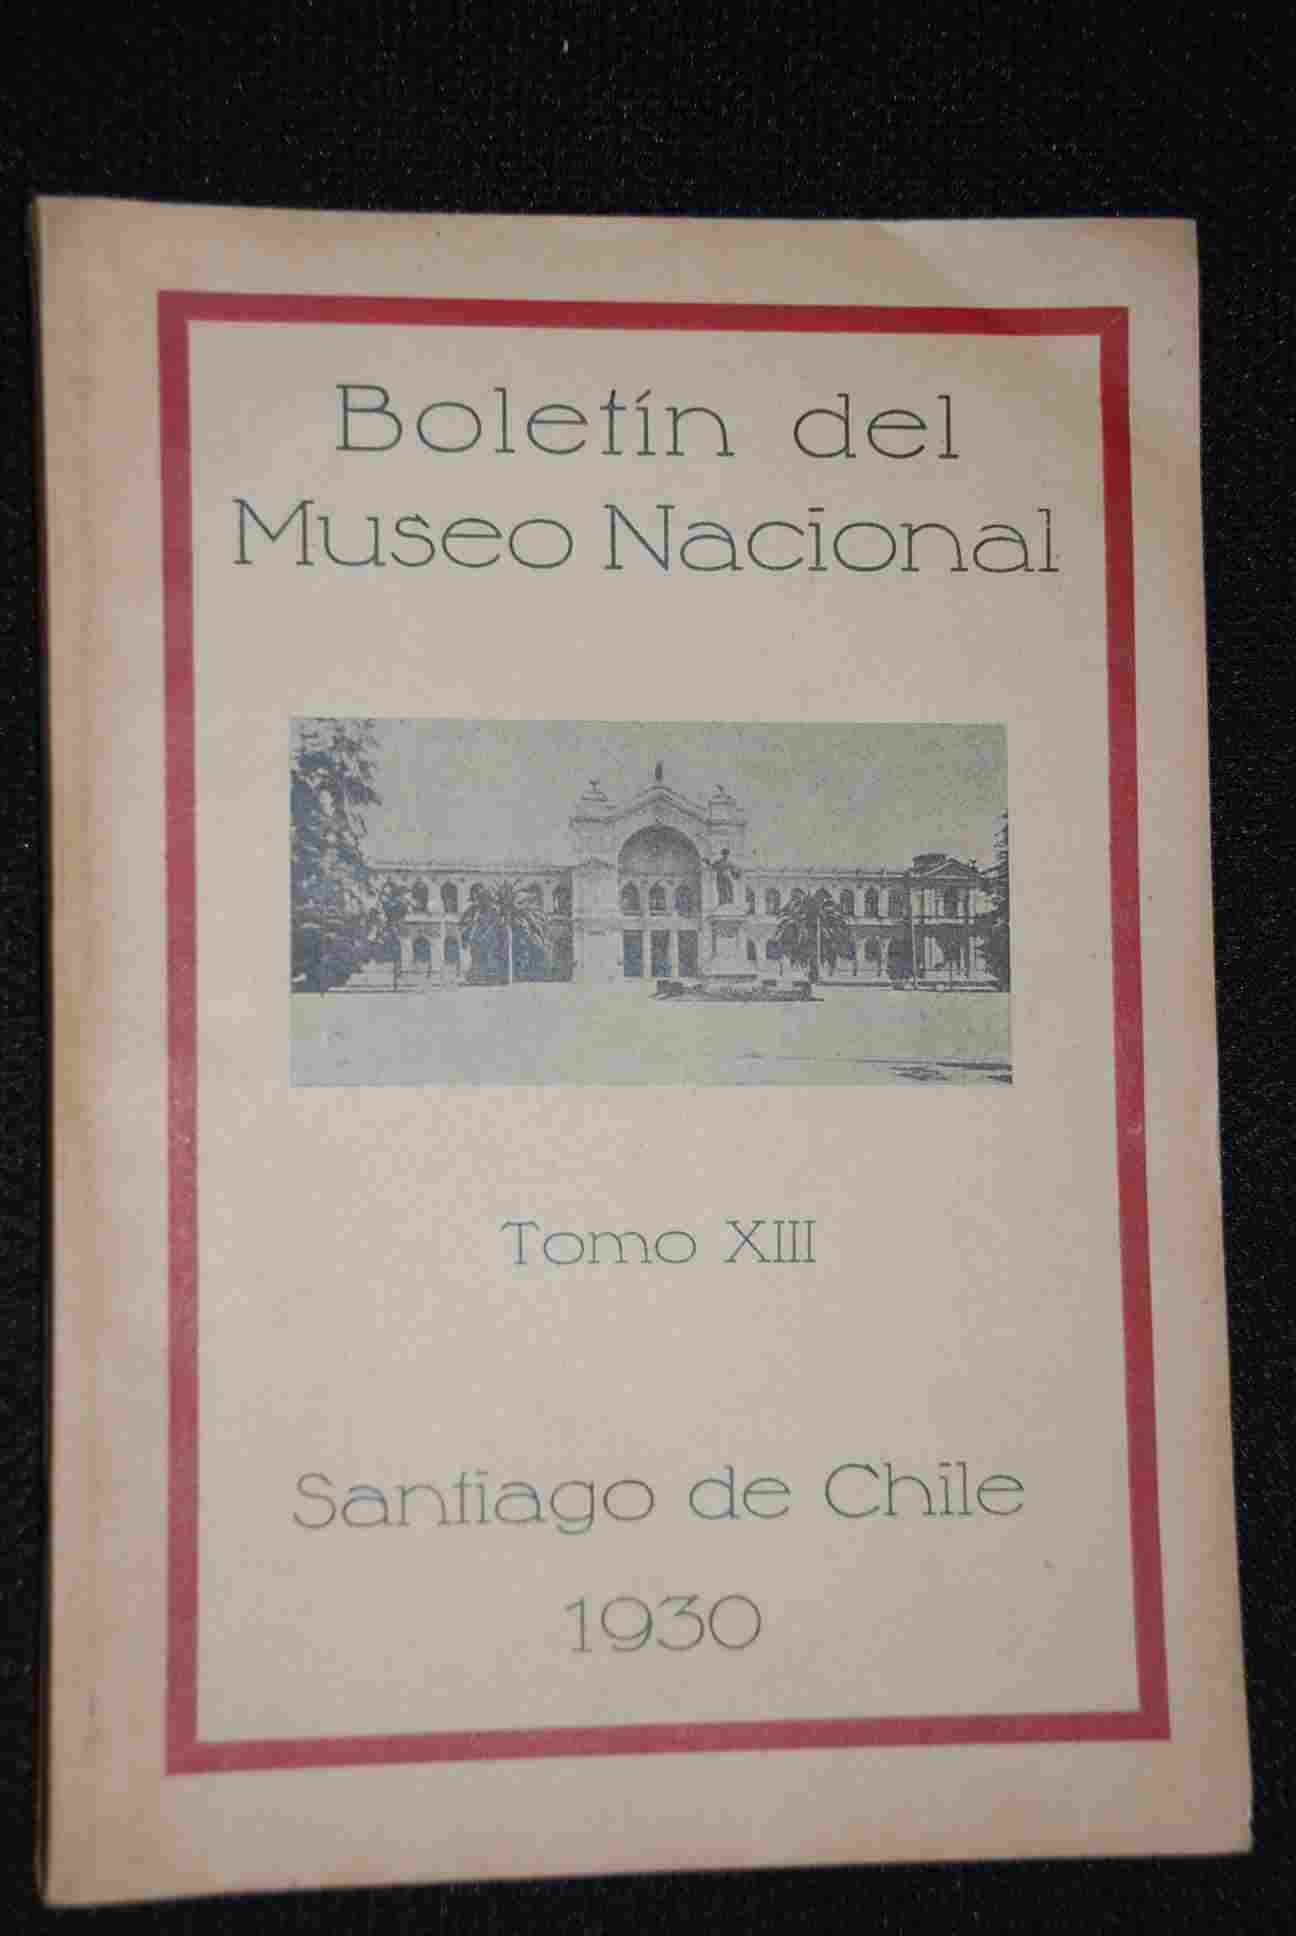 Boletin del Museo Nacional Tomo XIII